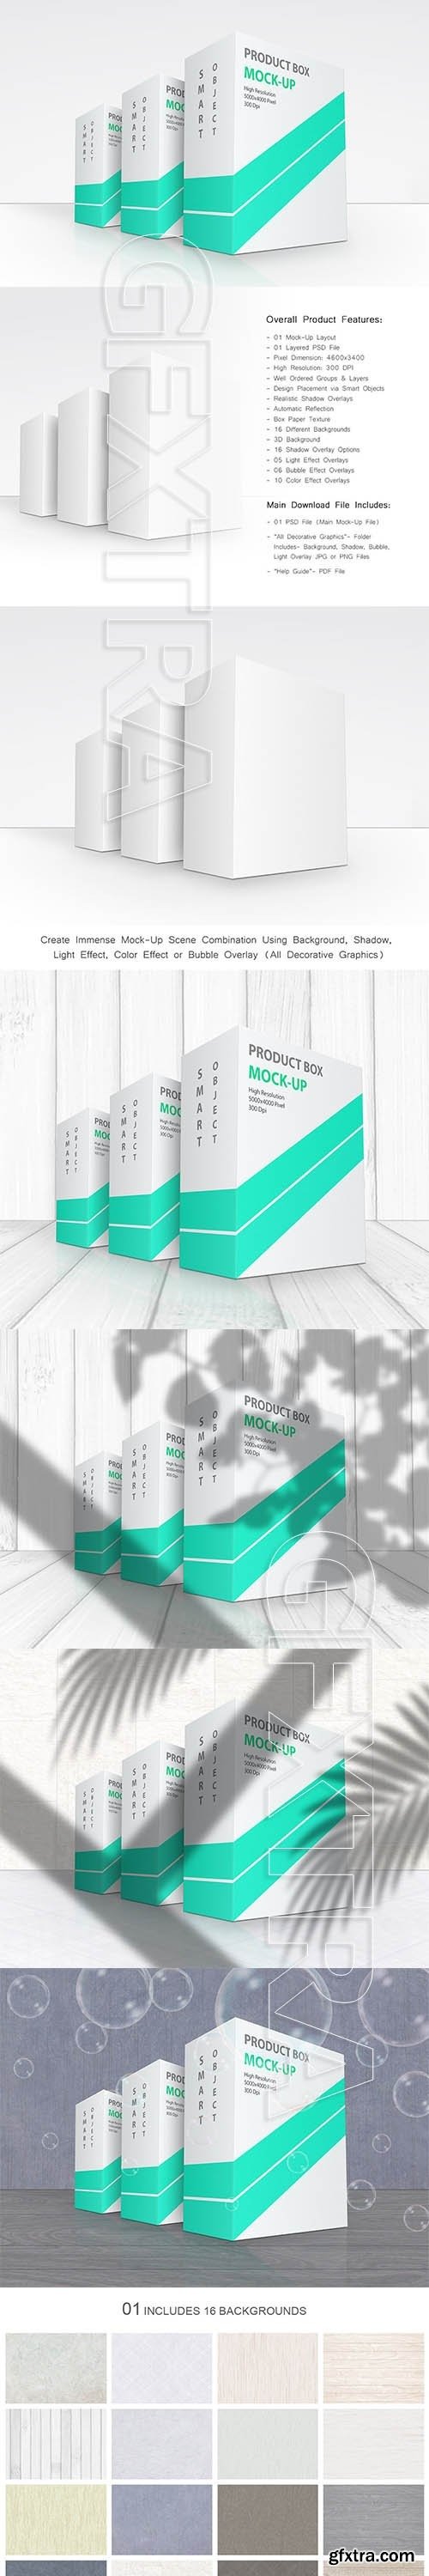 CreativeMarket - Product Box Mock-Up 09 5591844